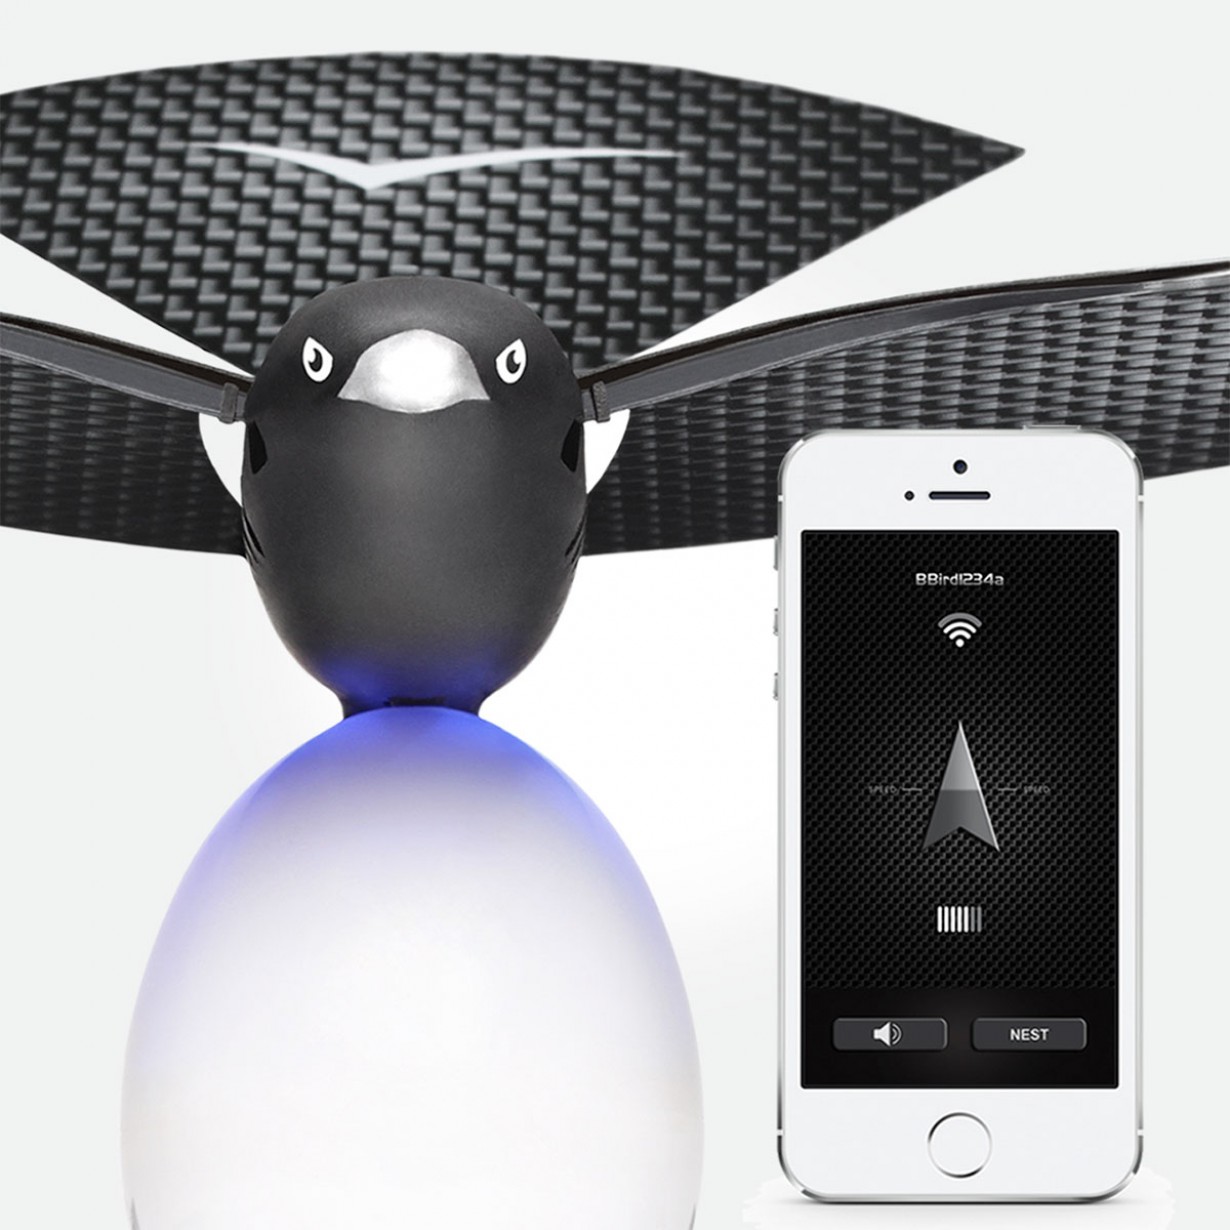 uccello bionico app, regalo originale per chi ama i gadget, idee